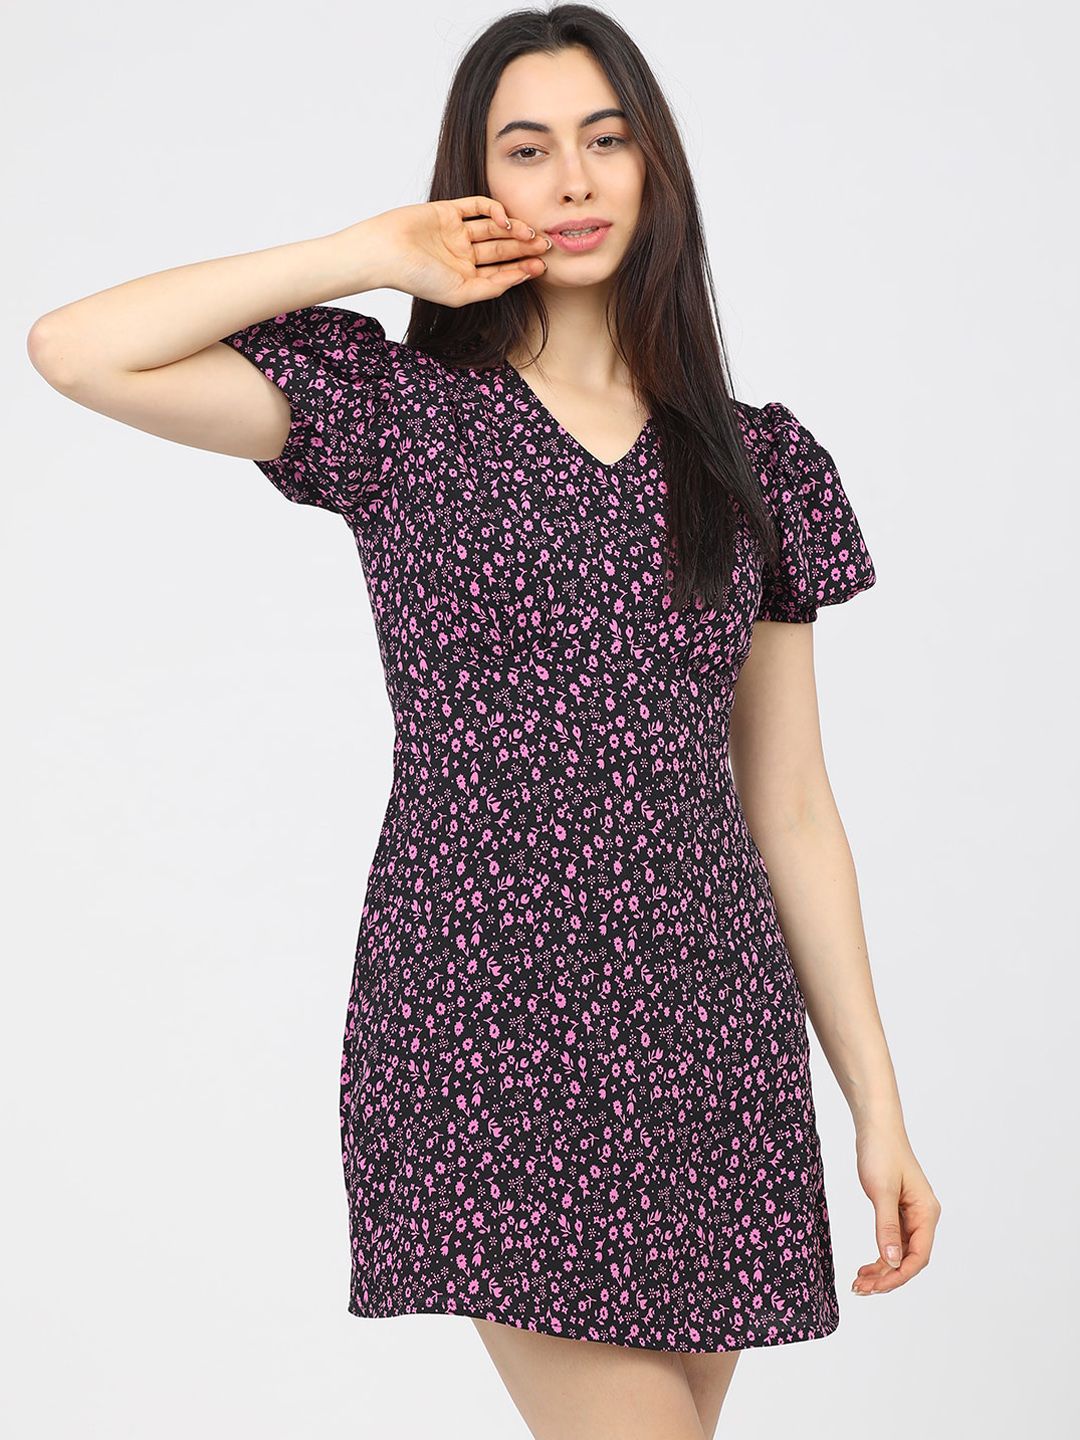 Tokyo Talkies Black & Pink Floral A-Line Mini Dress Price in India